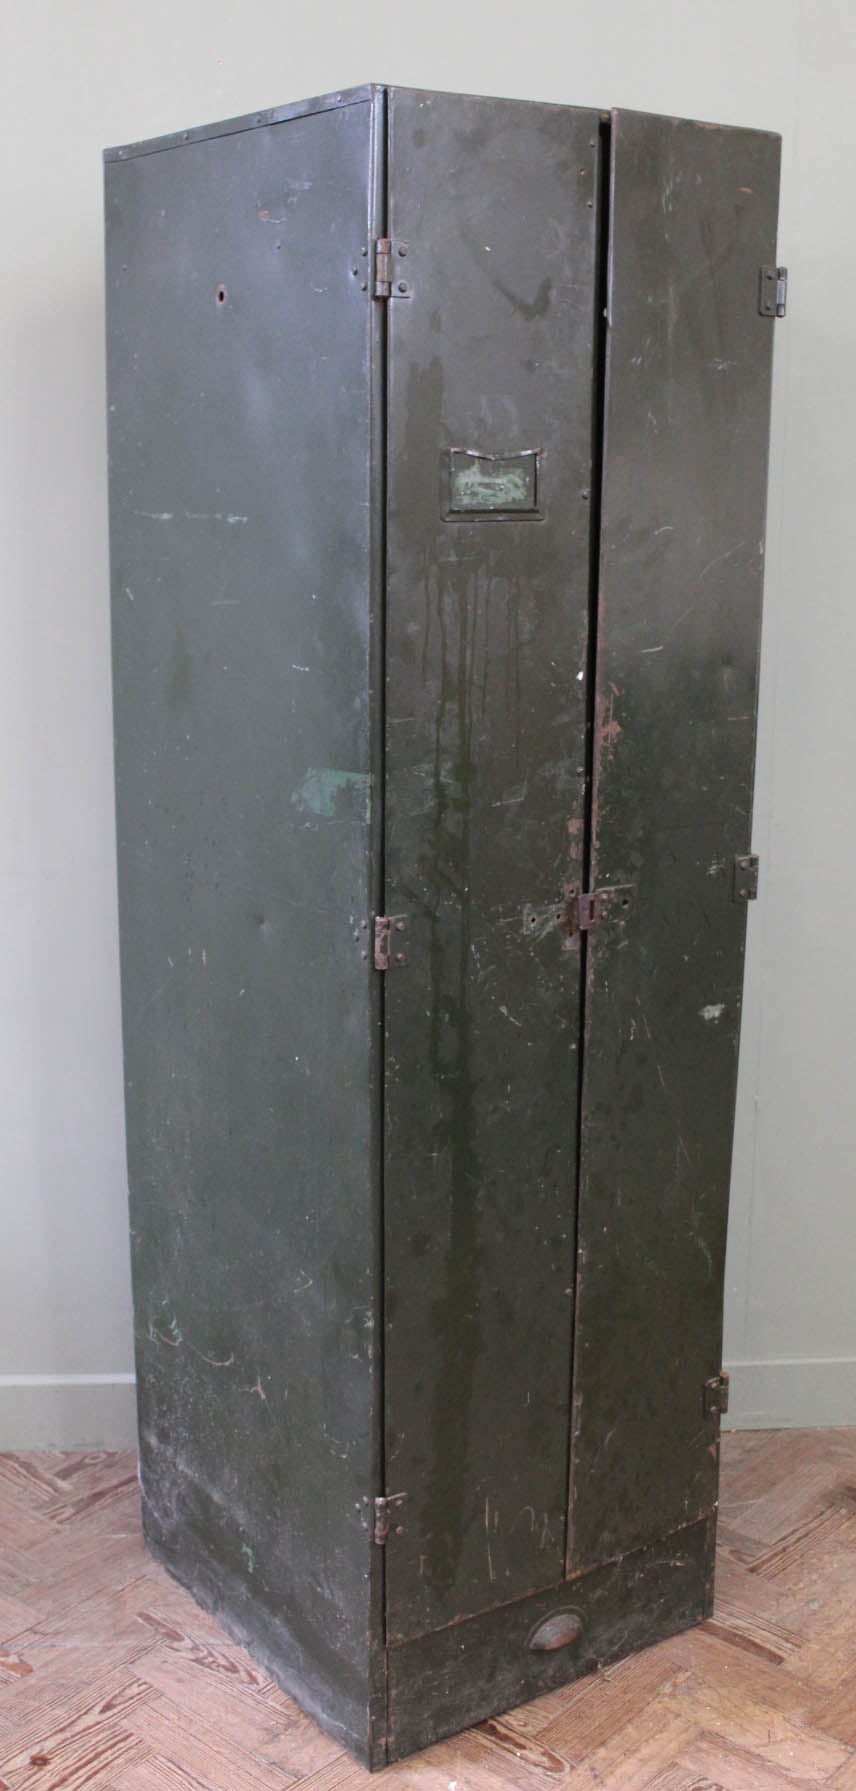 A pre-war dark green metal storage locker with internal drawer inside double locker doors and - Image 2 of 2